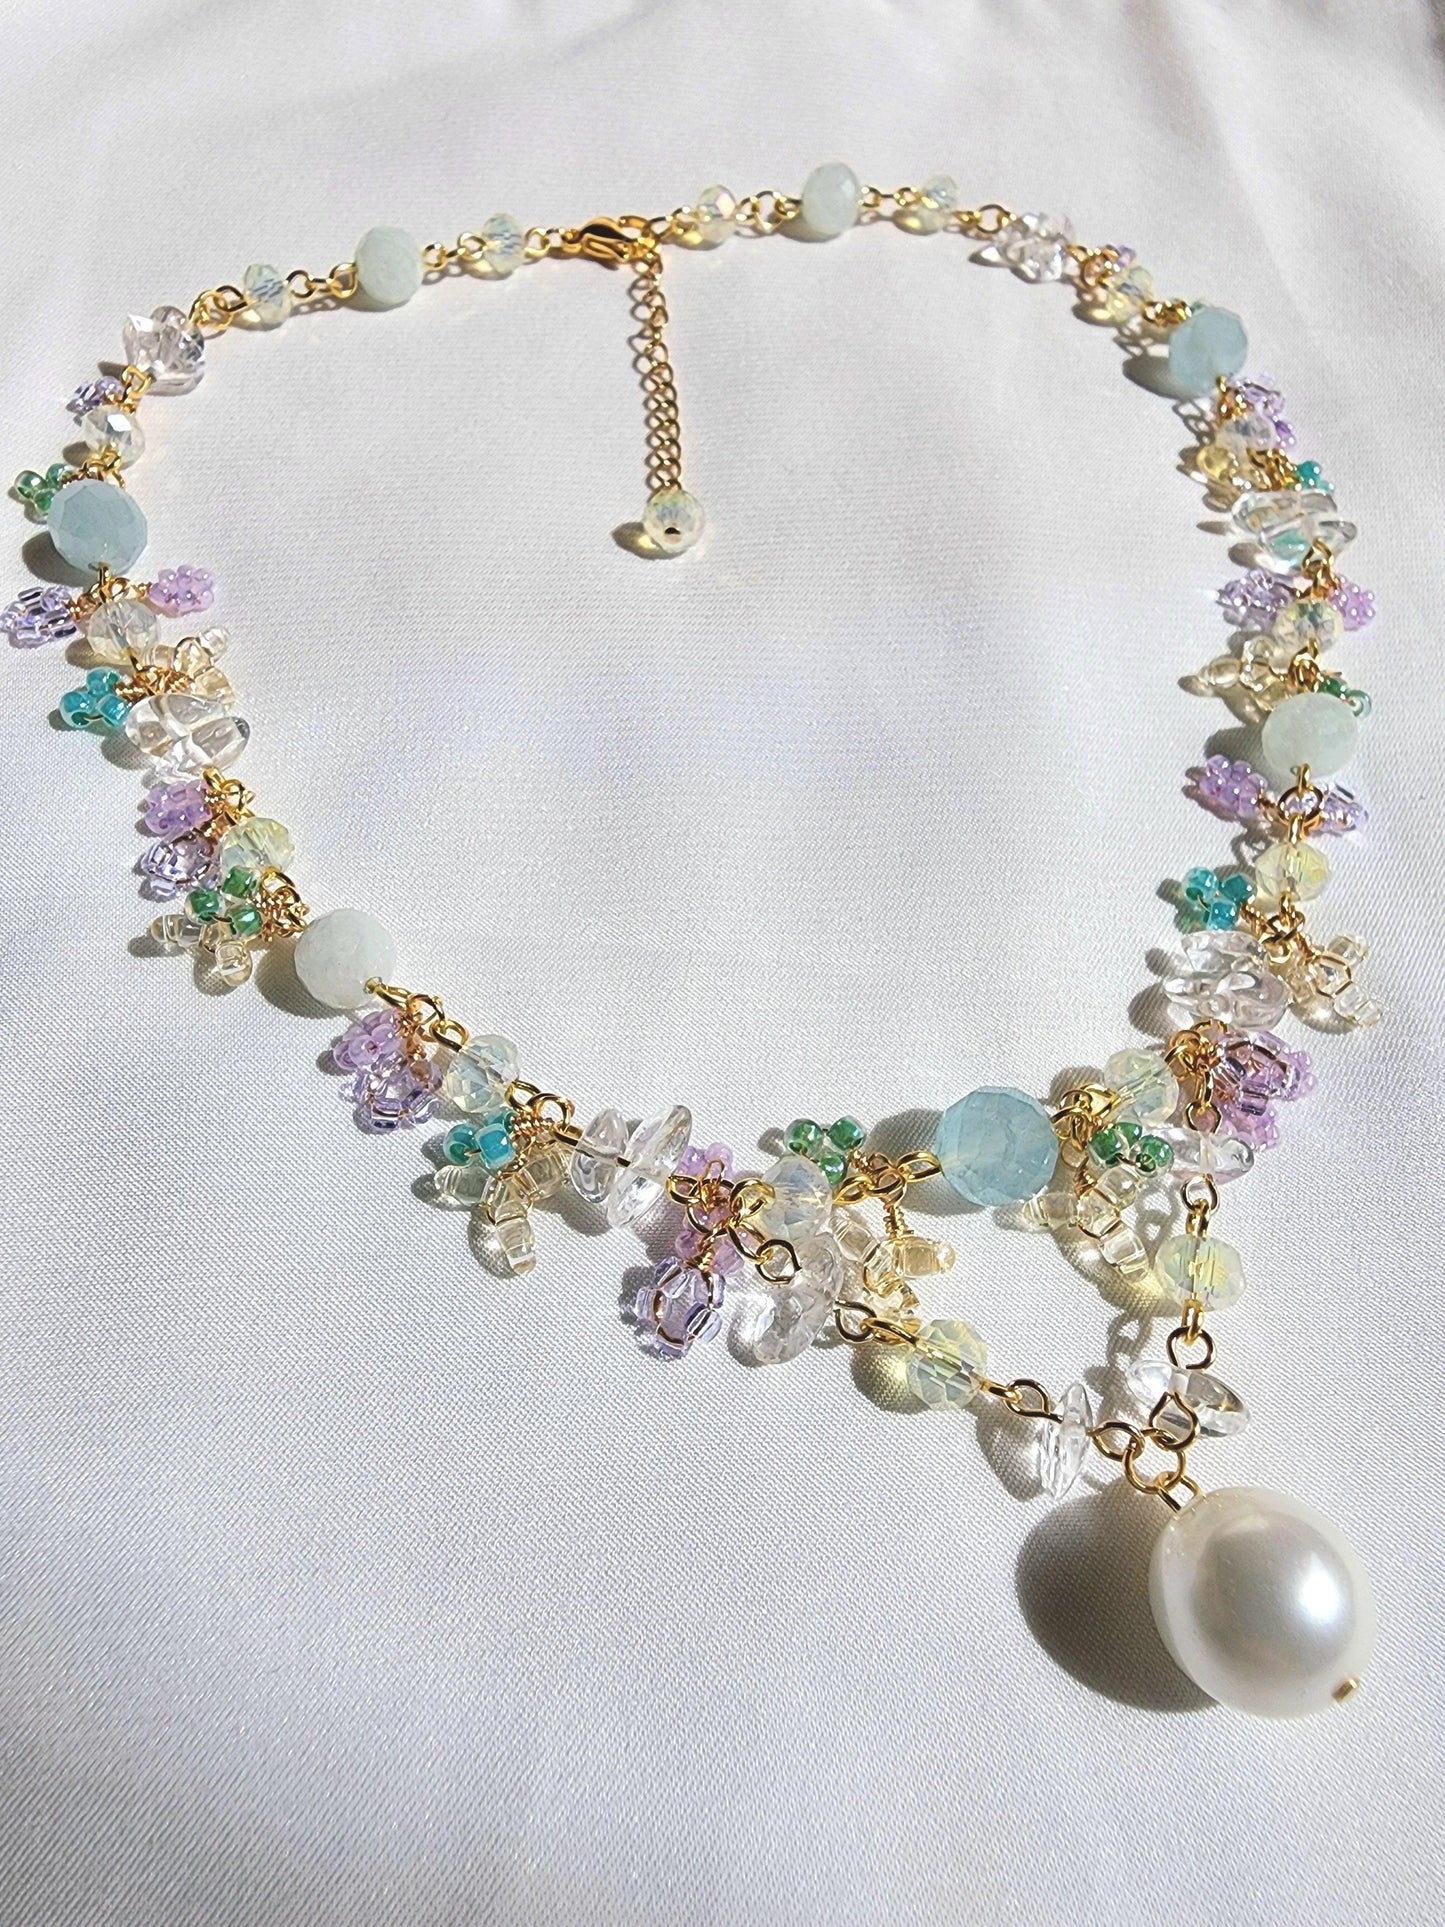 Mermaid's Treasure Necklace - By Cocoyu